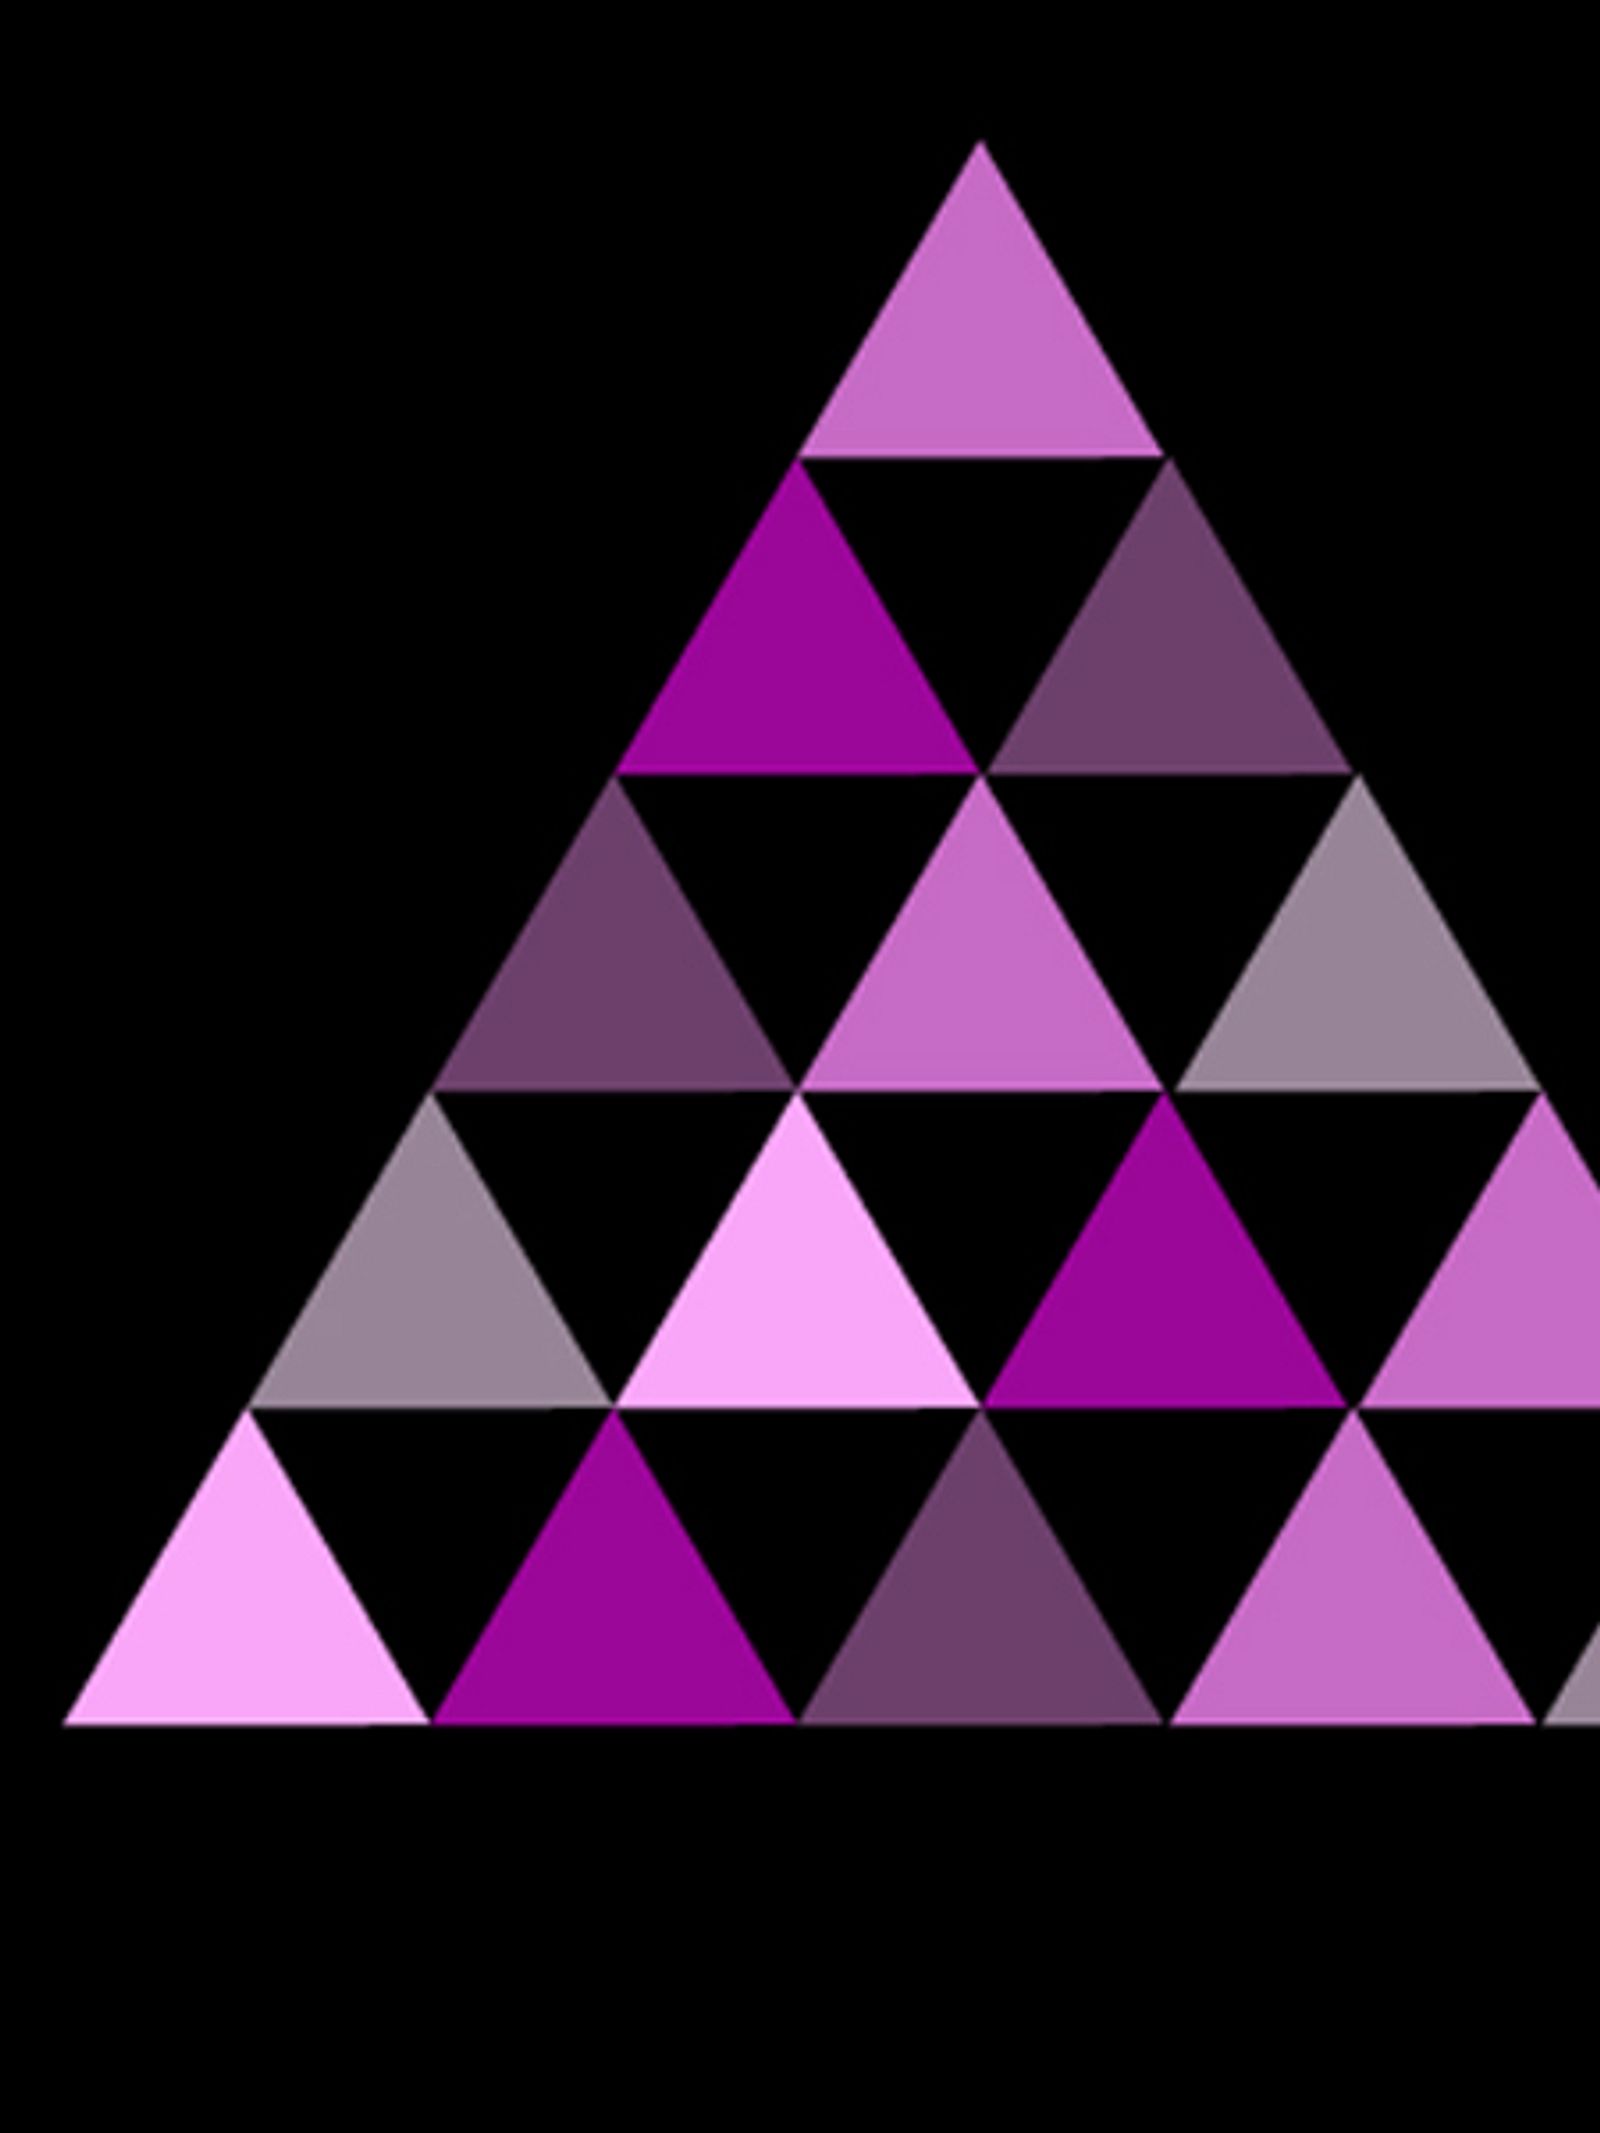 32+ Sprueche wunderweib , DreiecksRätsel Wie viele Dreiecke siehst du? Wunderweib